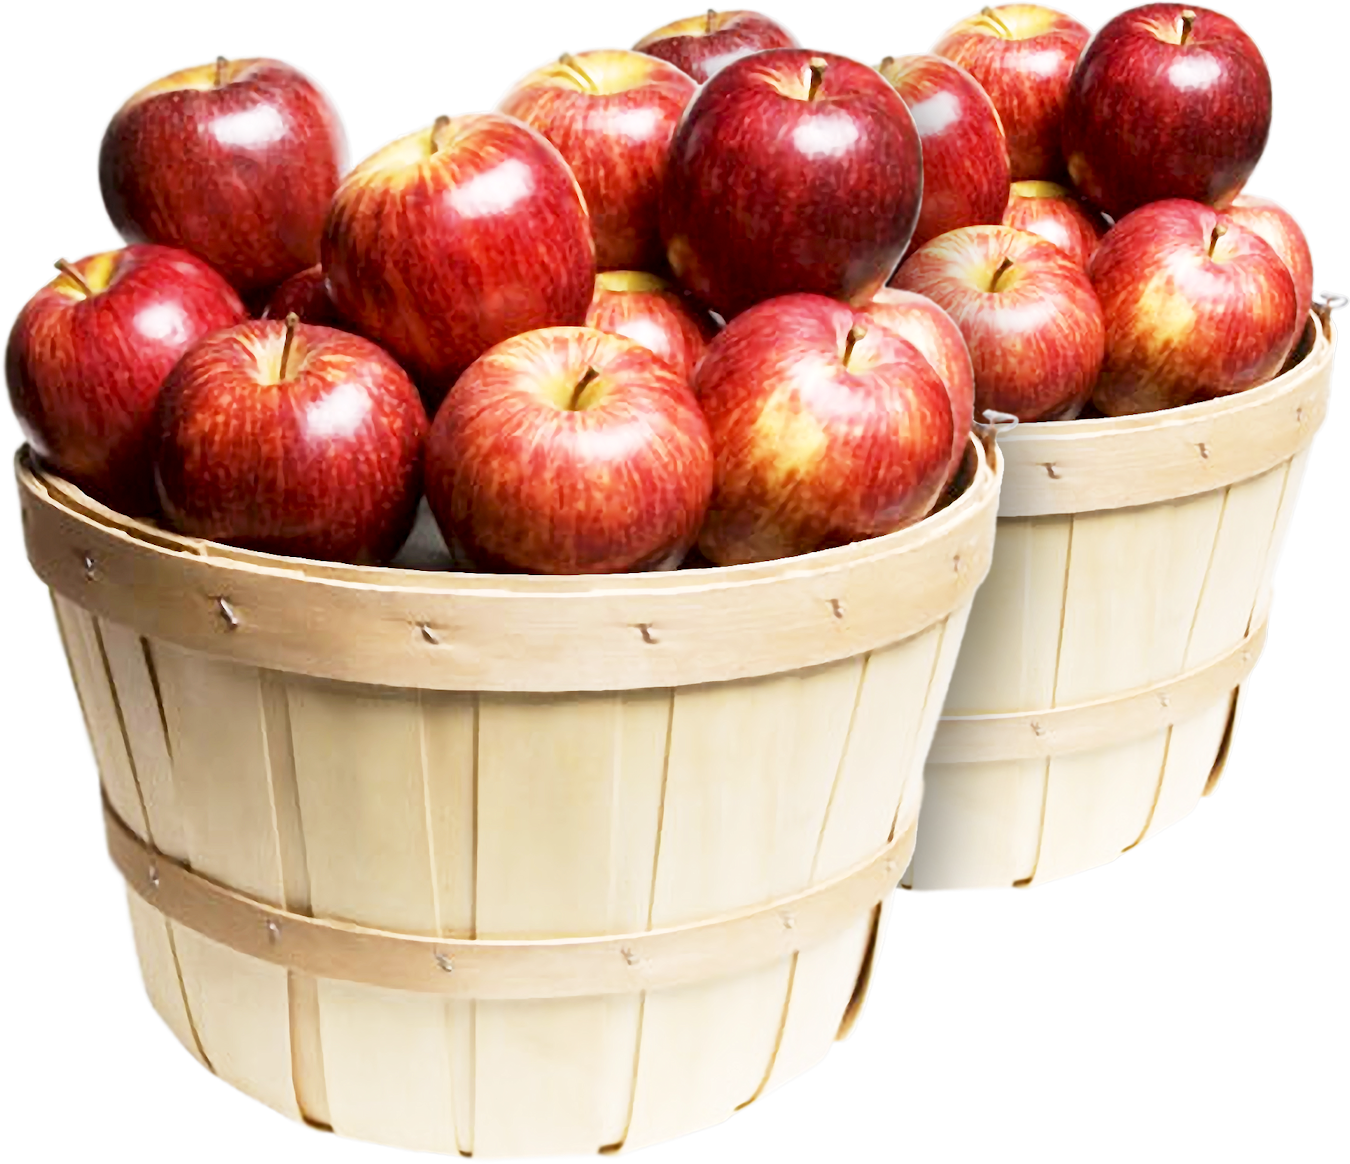 Apples Cartoon Clipart